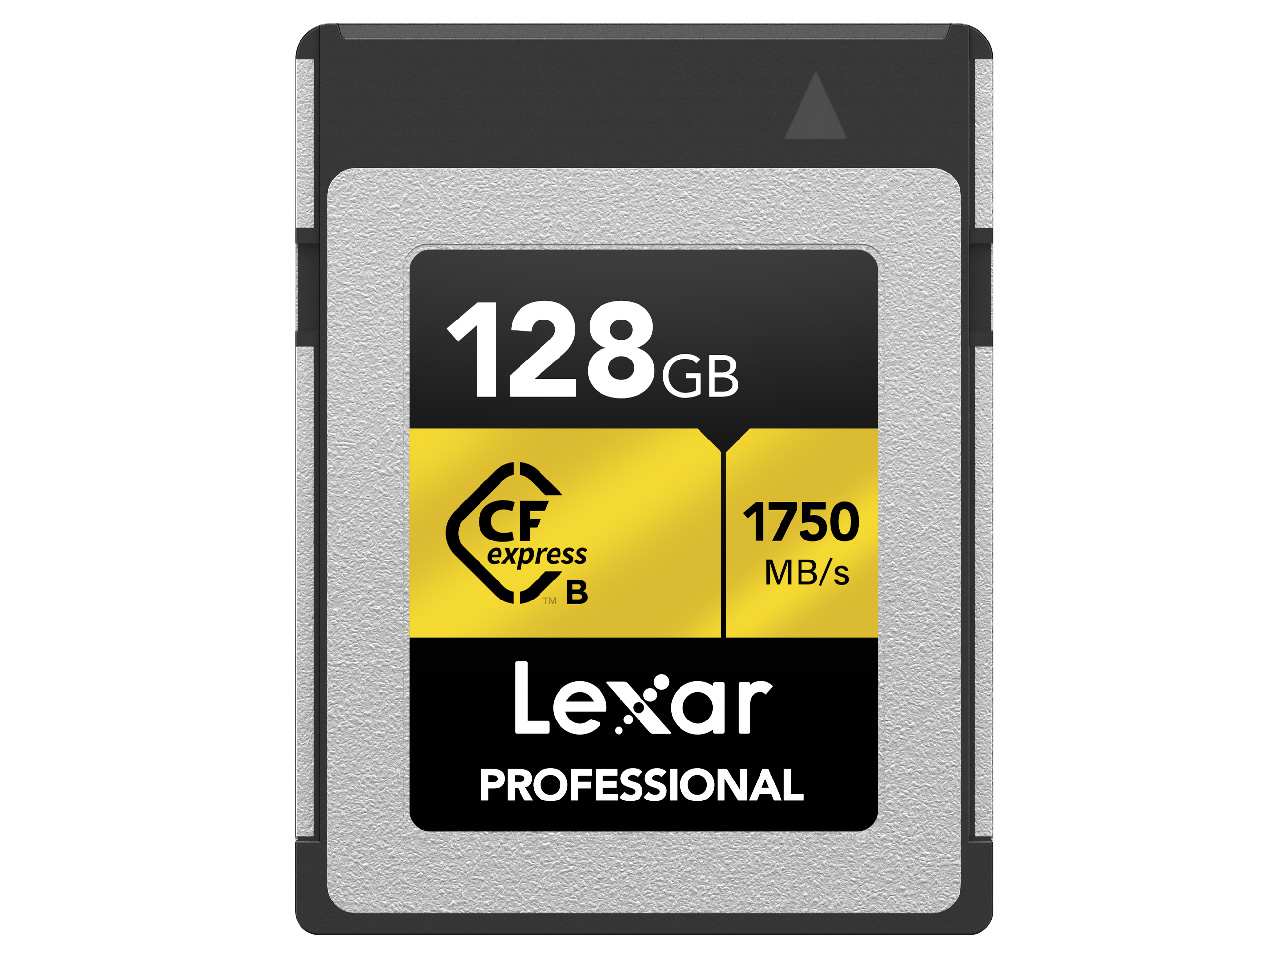 LCFX10-128CRB [128GB]